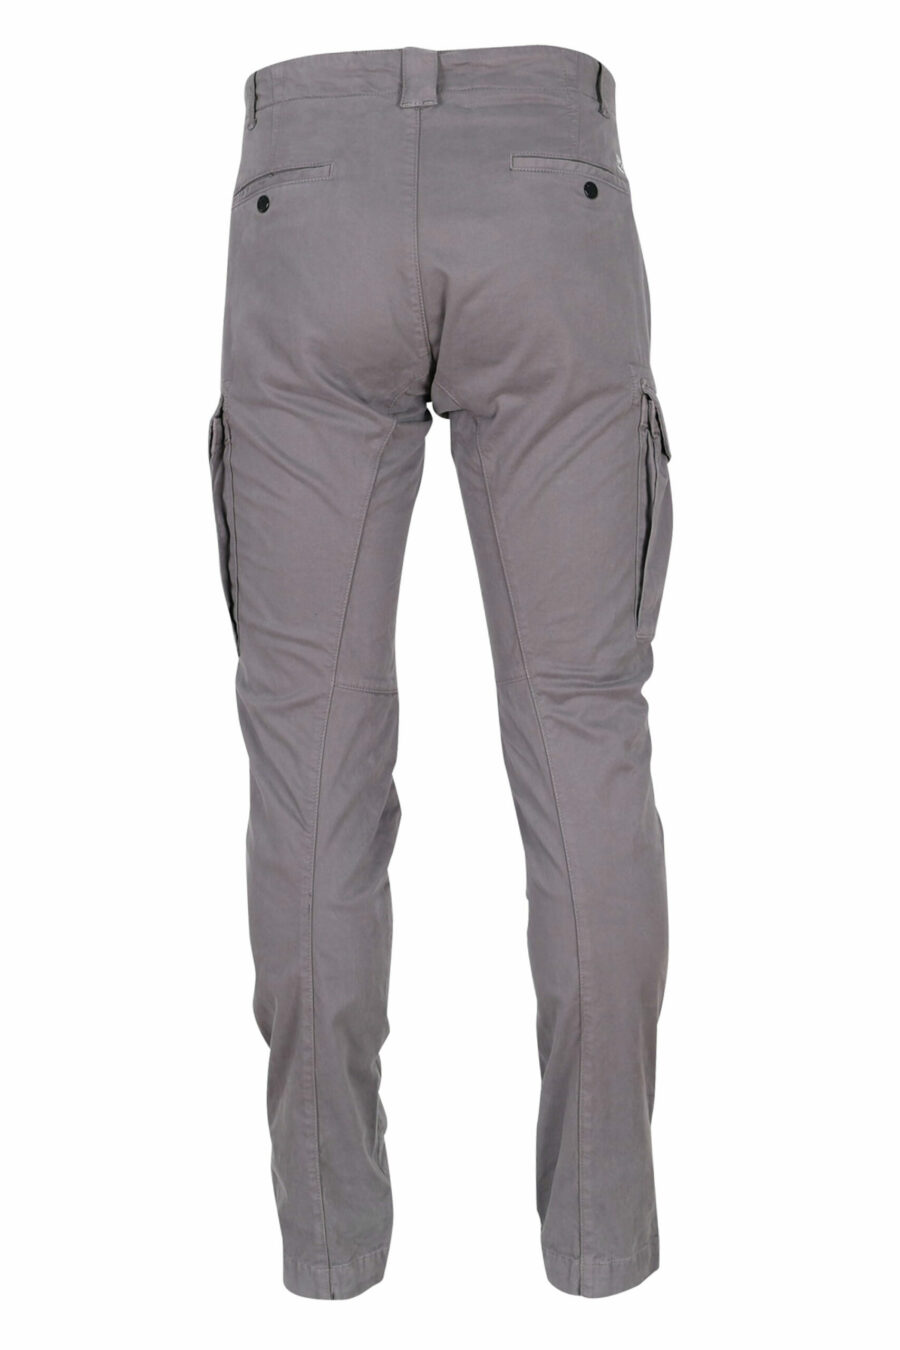 Pantalon cargo gris anthracite en satin stretch et lentille logo - 7620943597400 2 scaled